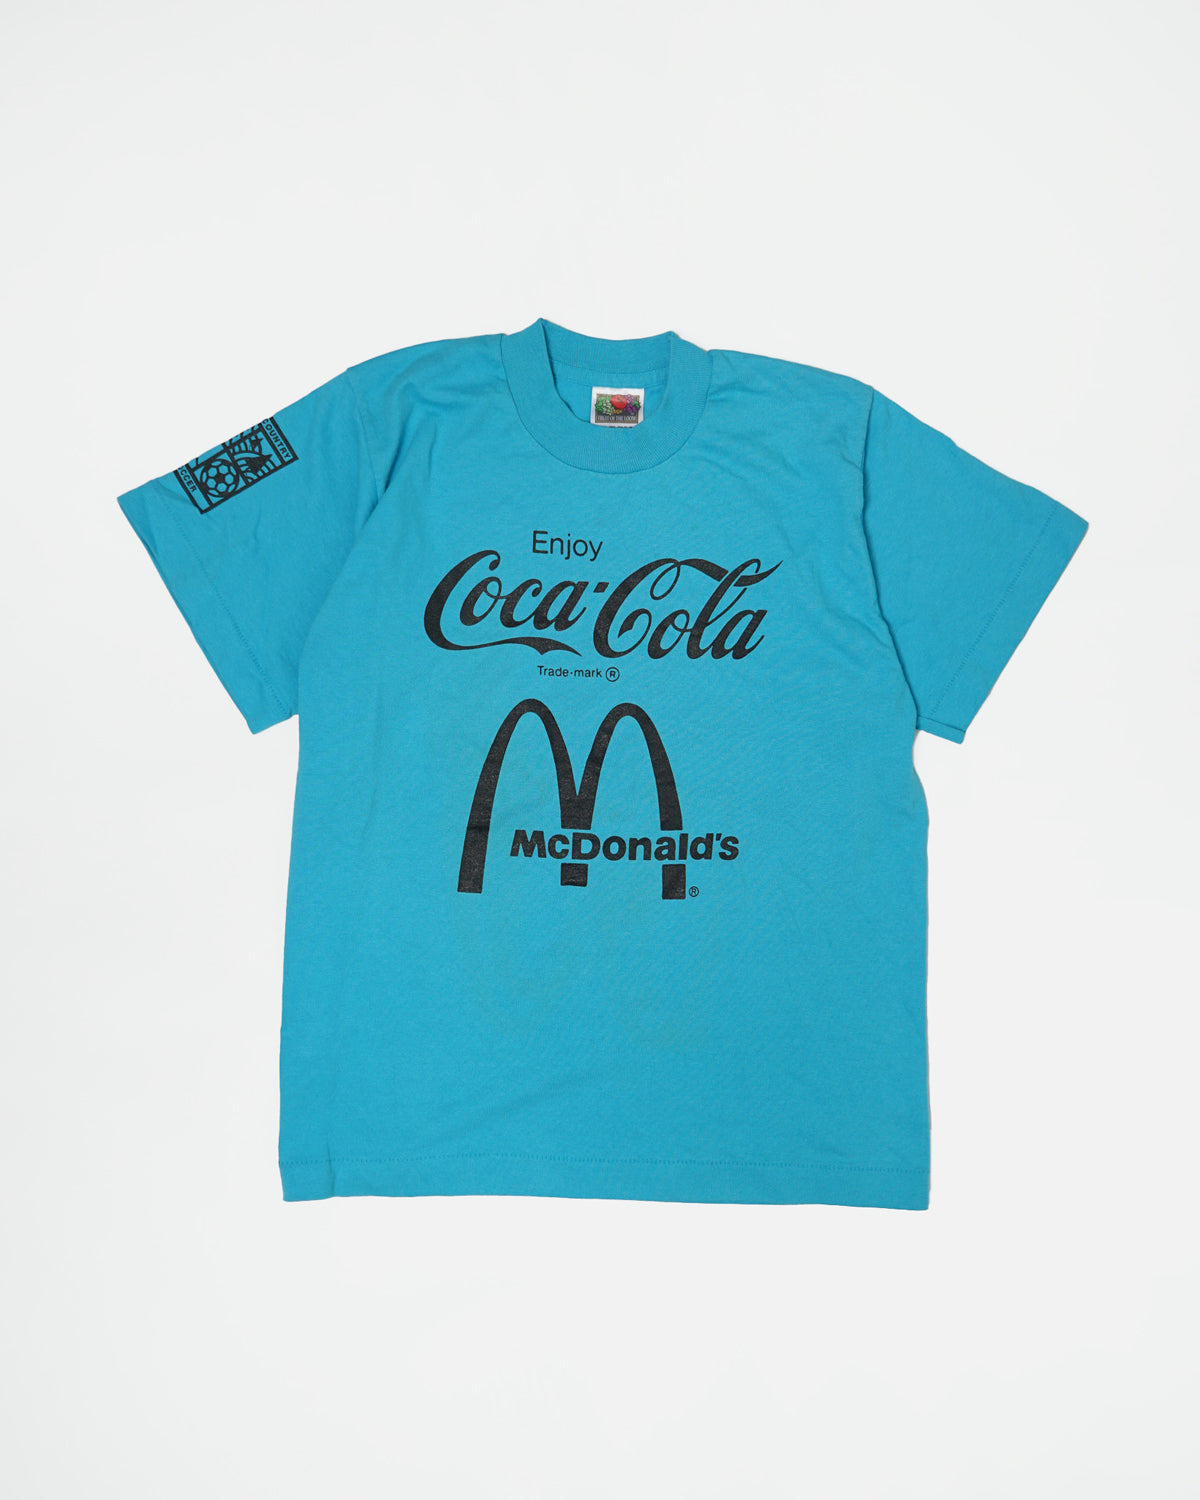 Graphic Tee / Coca Cola, McDonald's